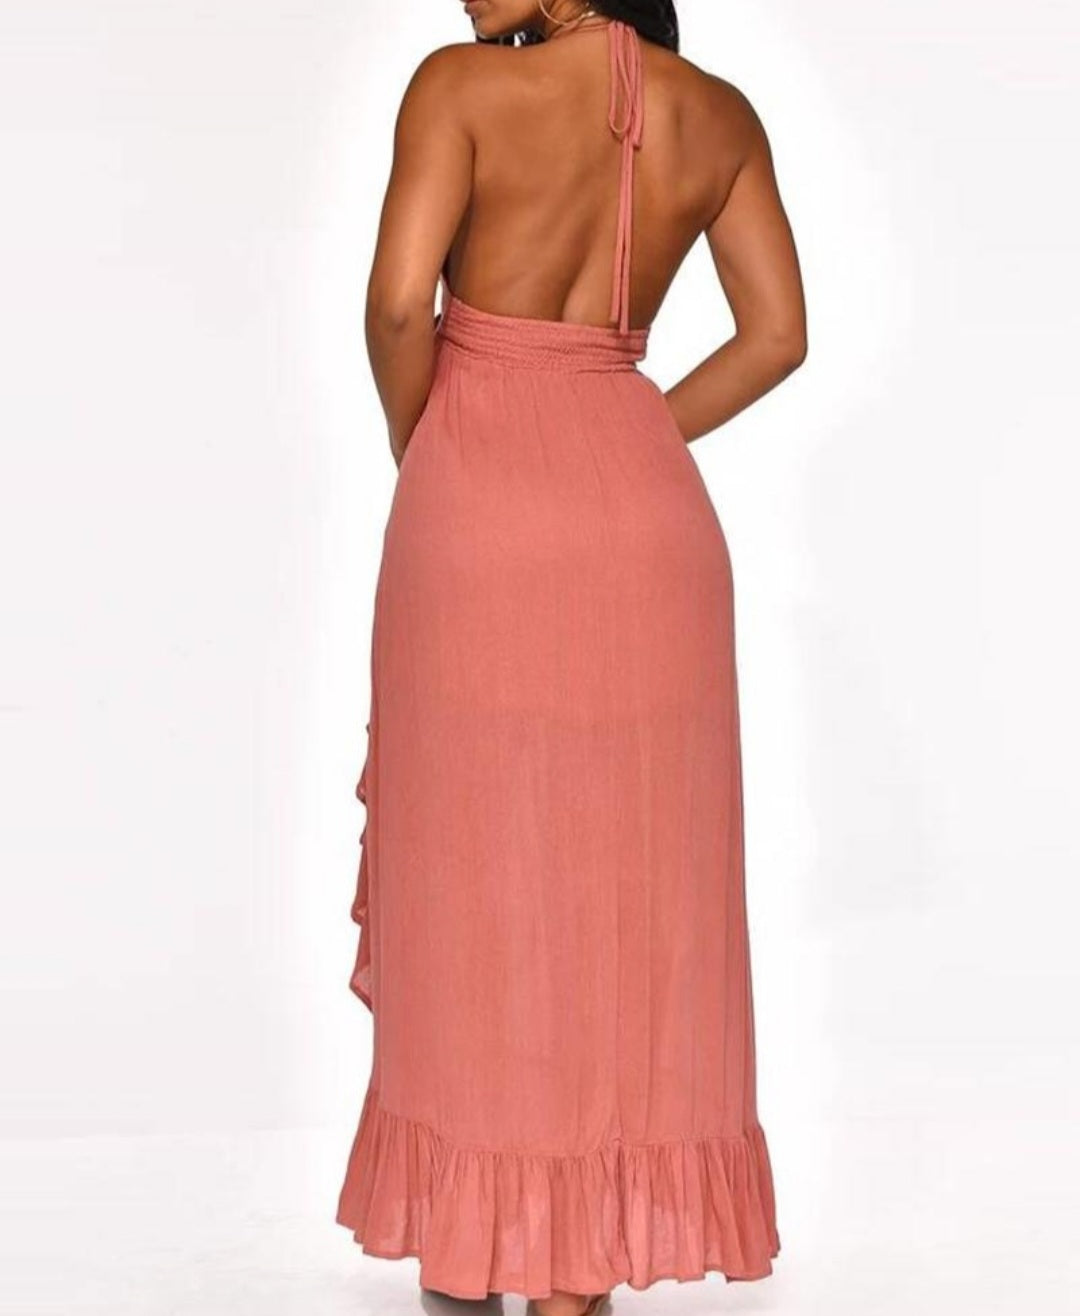 Strawberry Shortcake Dress - 40Fly Fashion